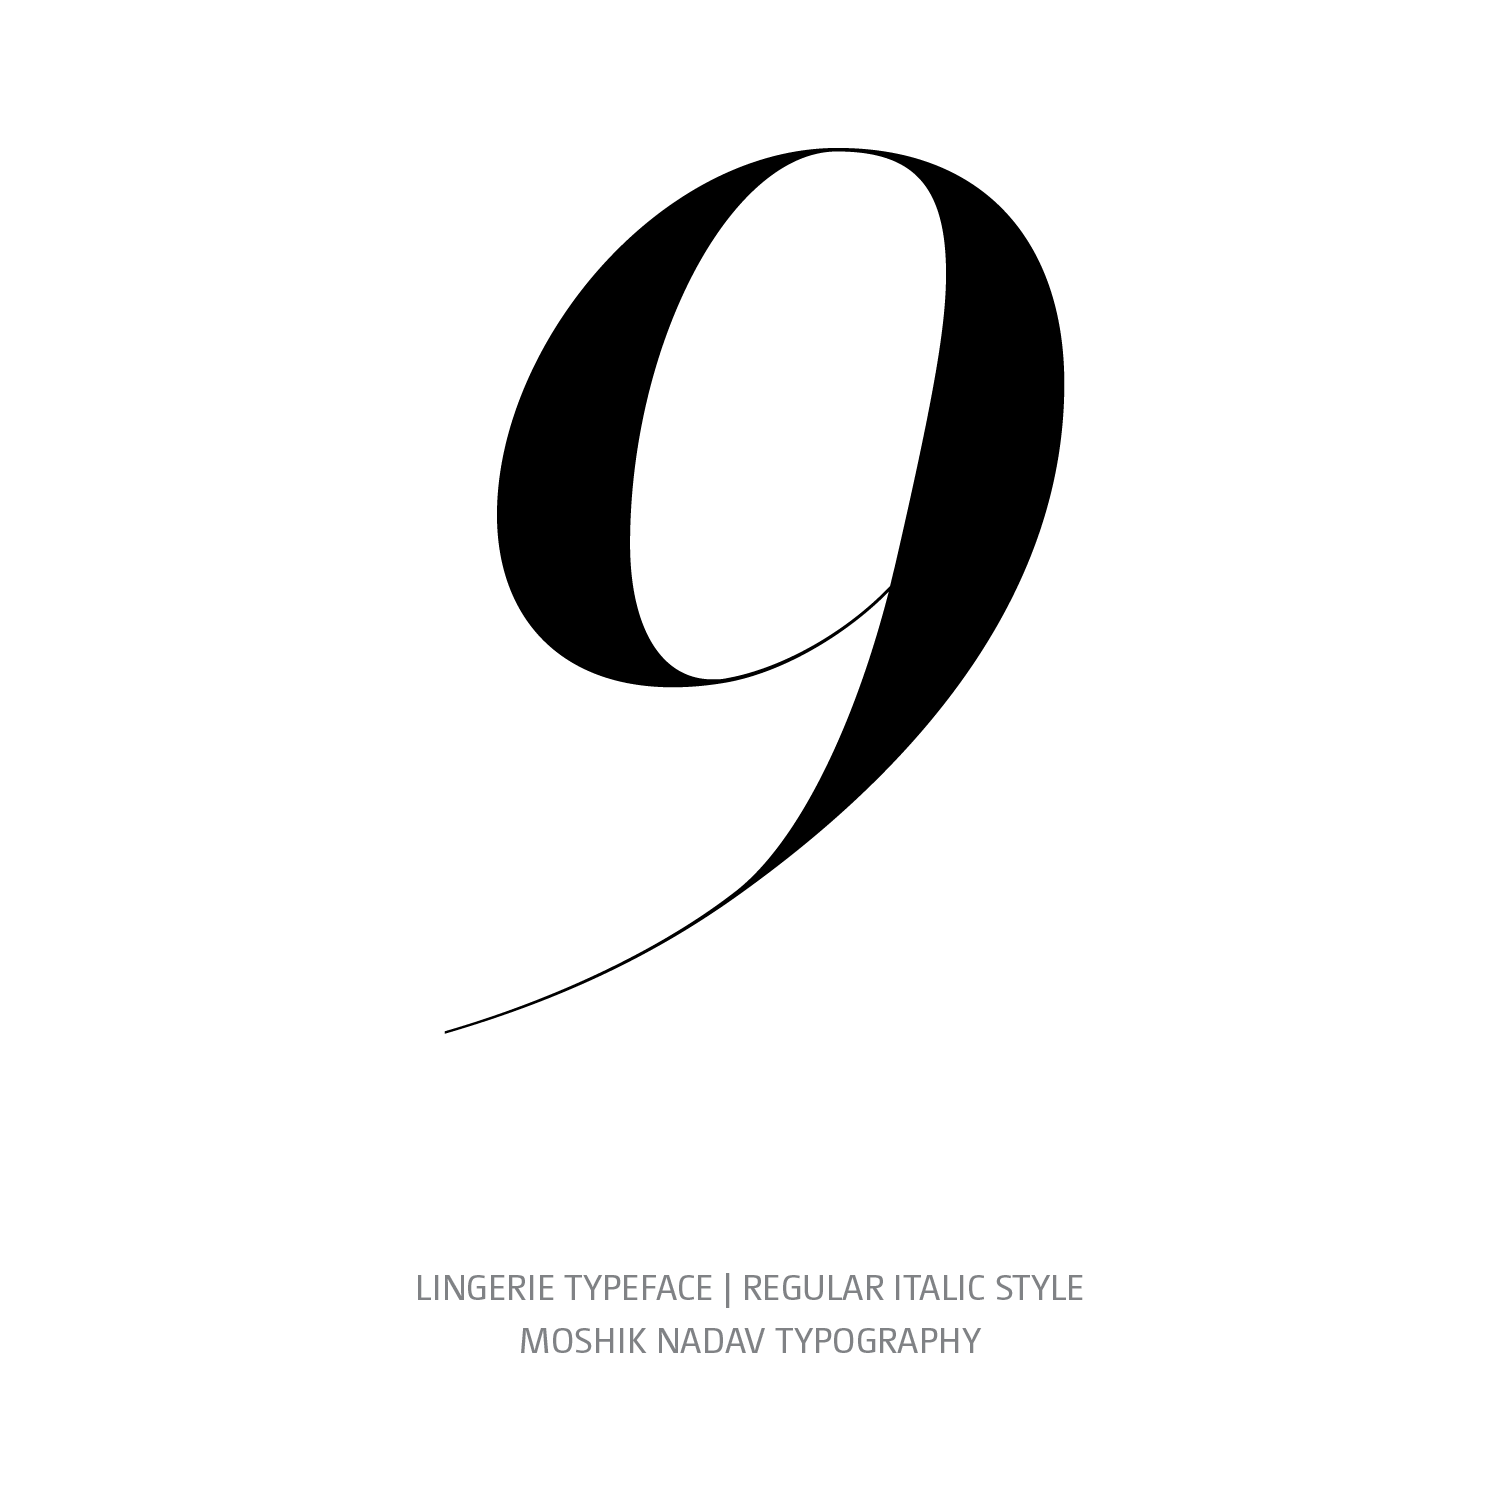 Lingerie Typeface Regular Italic 9 - Fashion fonts by Moshik Nadav Typography